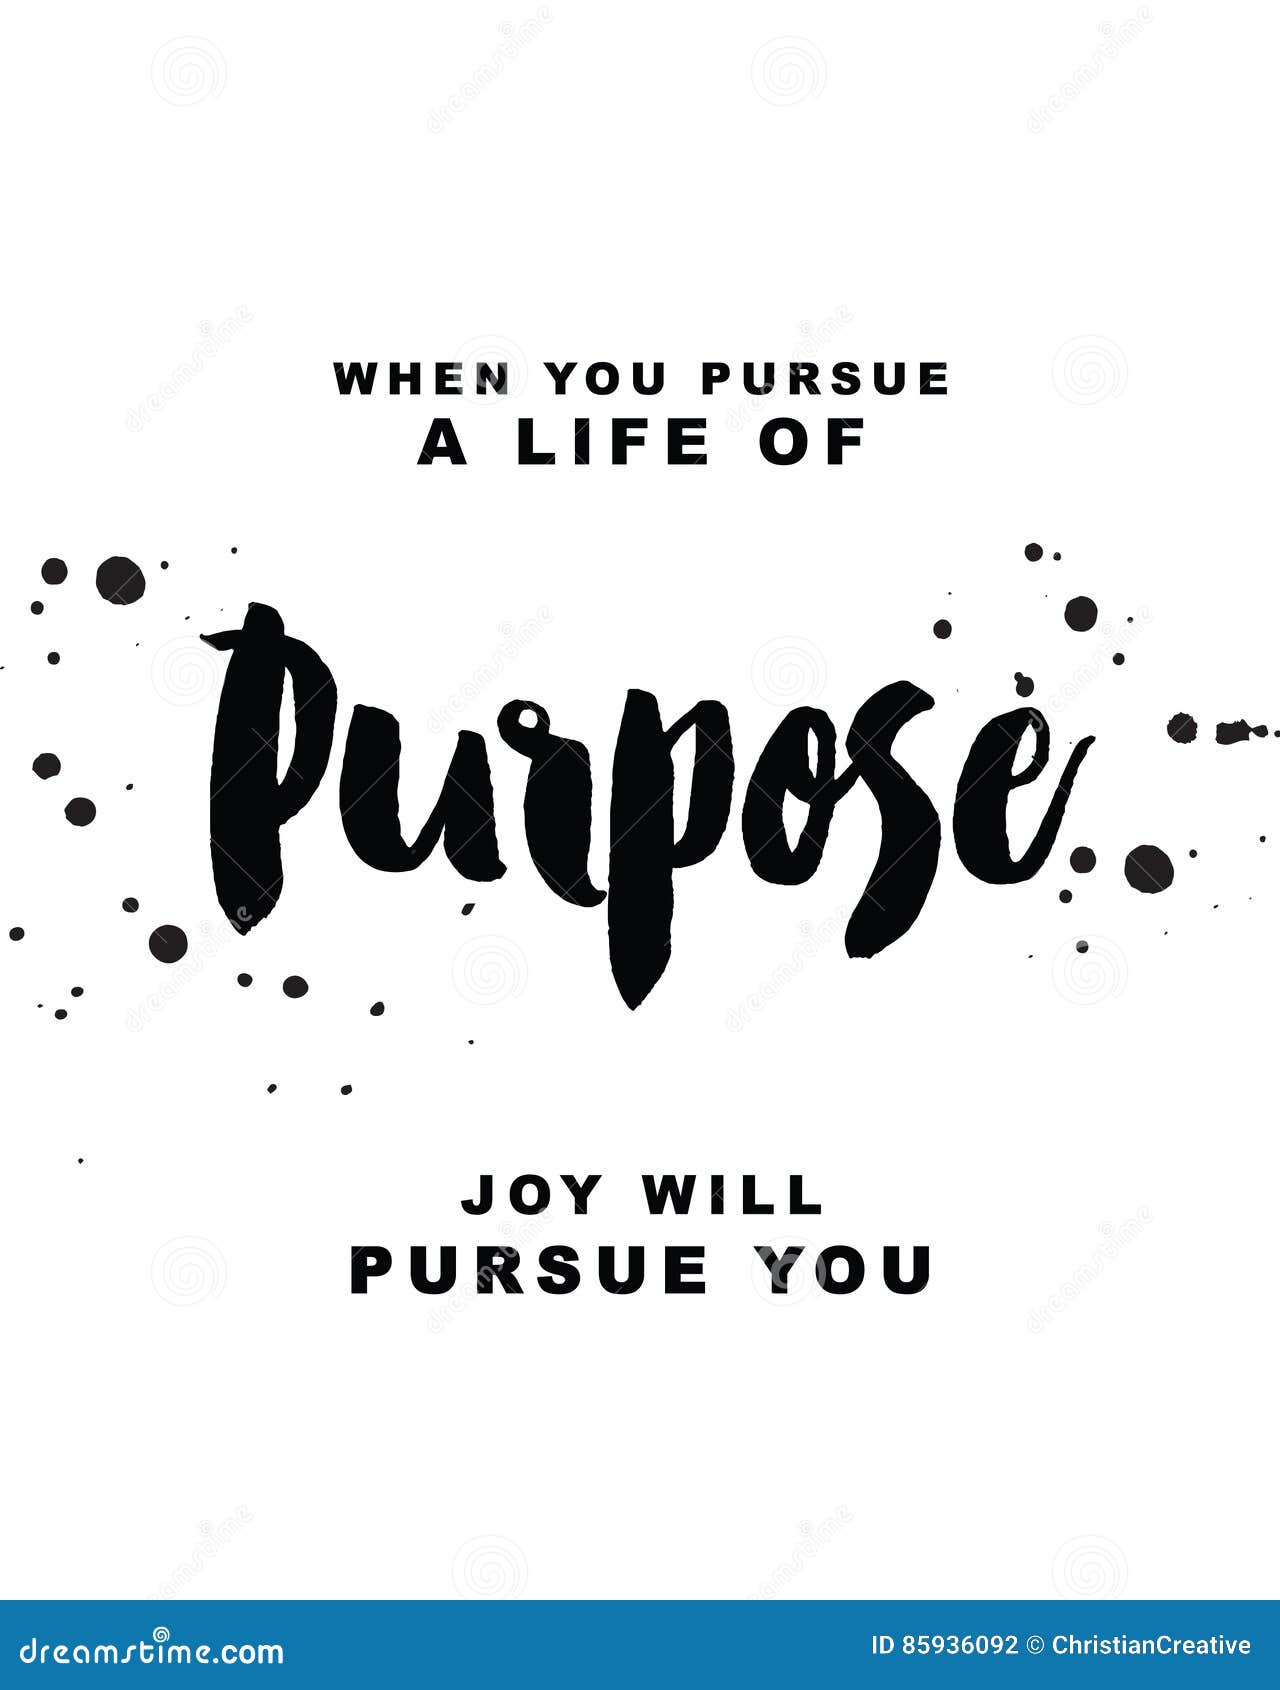 when you pursue a life of purpose, joy will pursue you